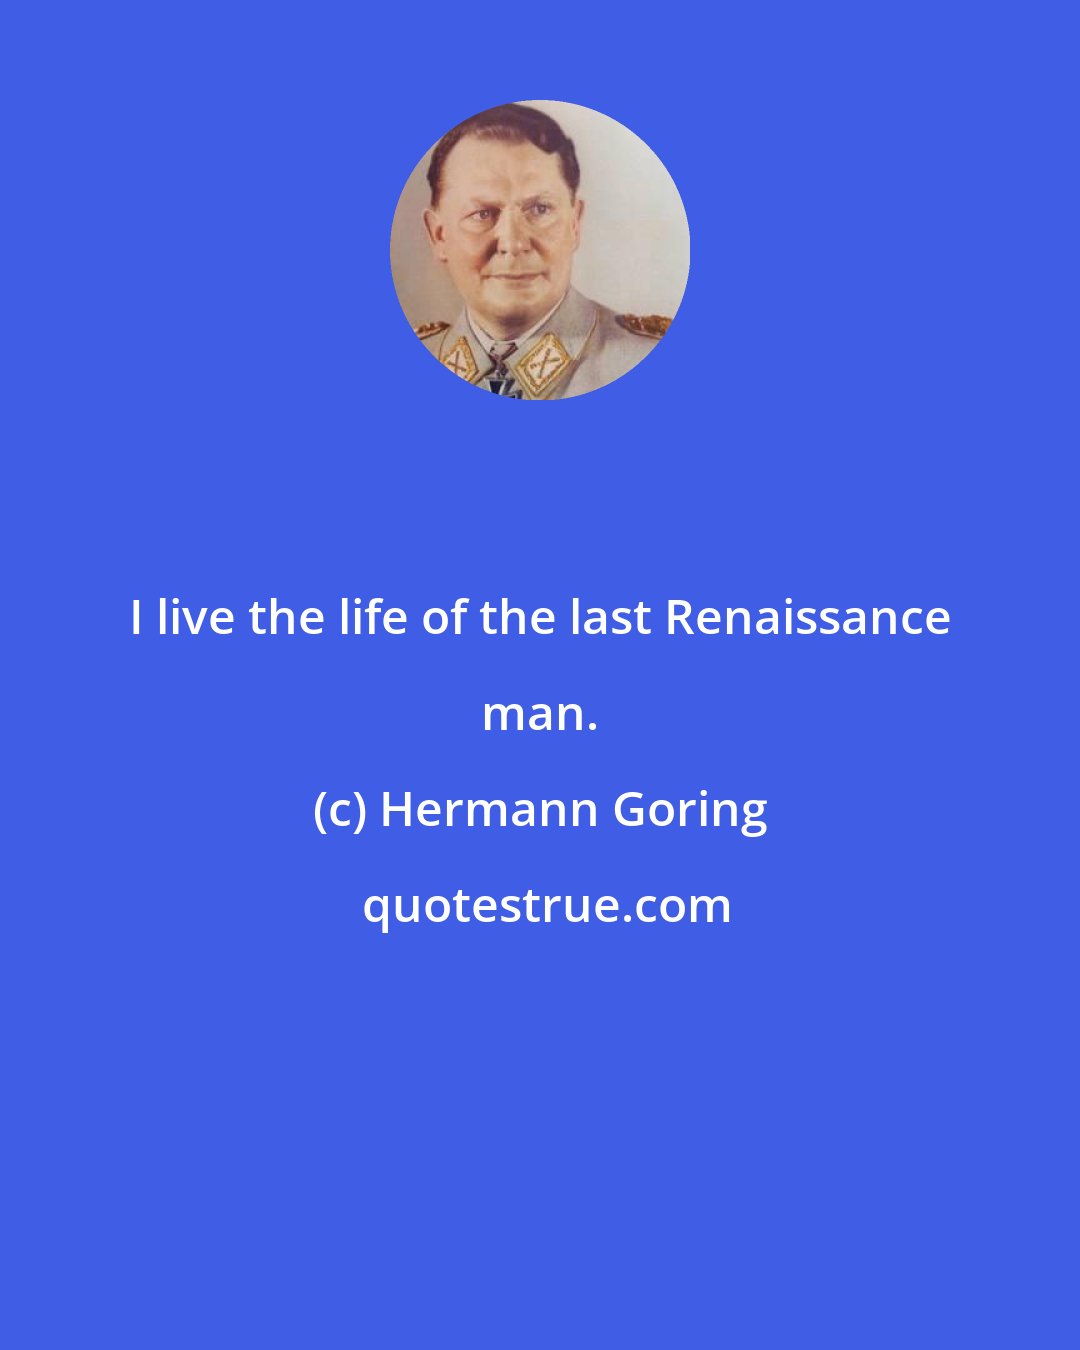 Hermann Goring: I live the life of the last Renaissance man.